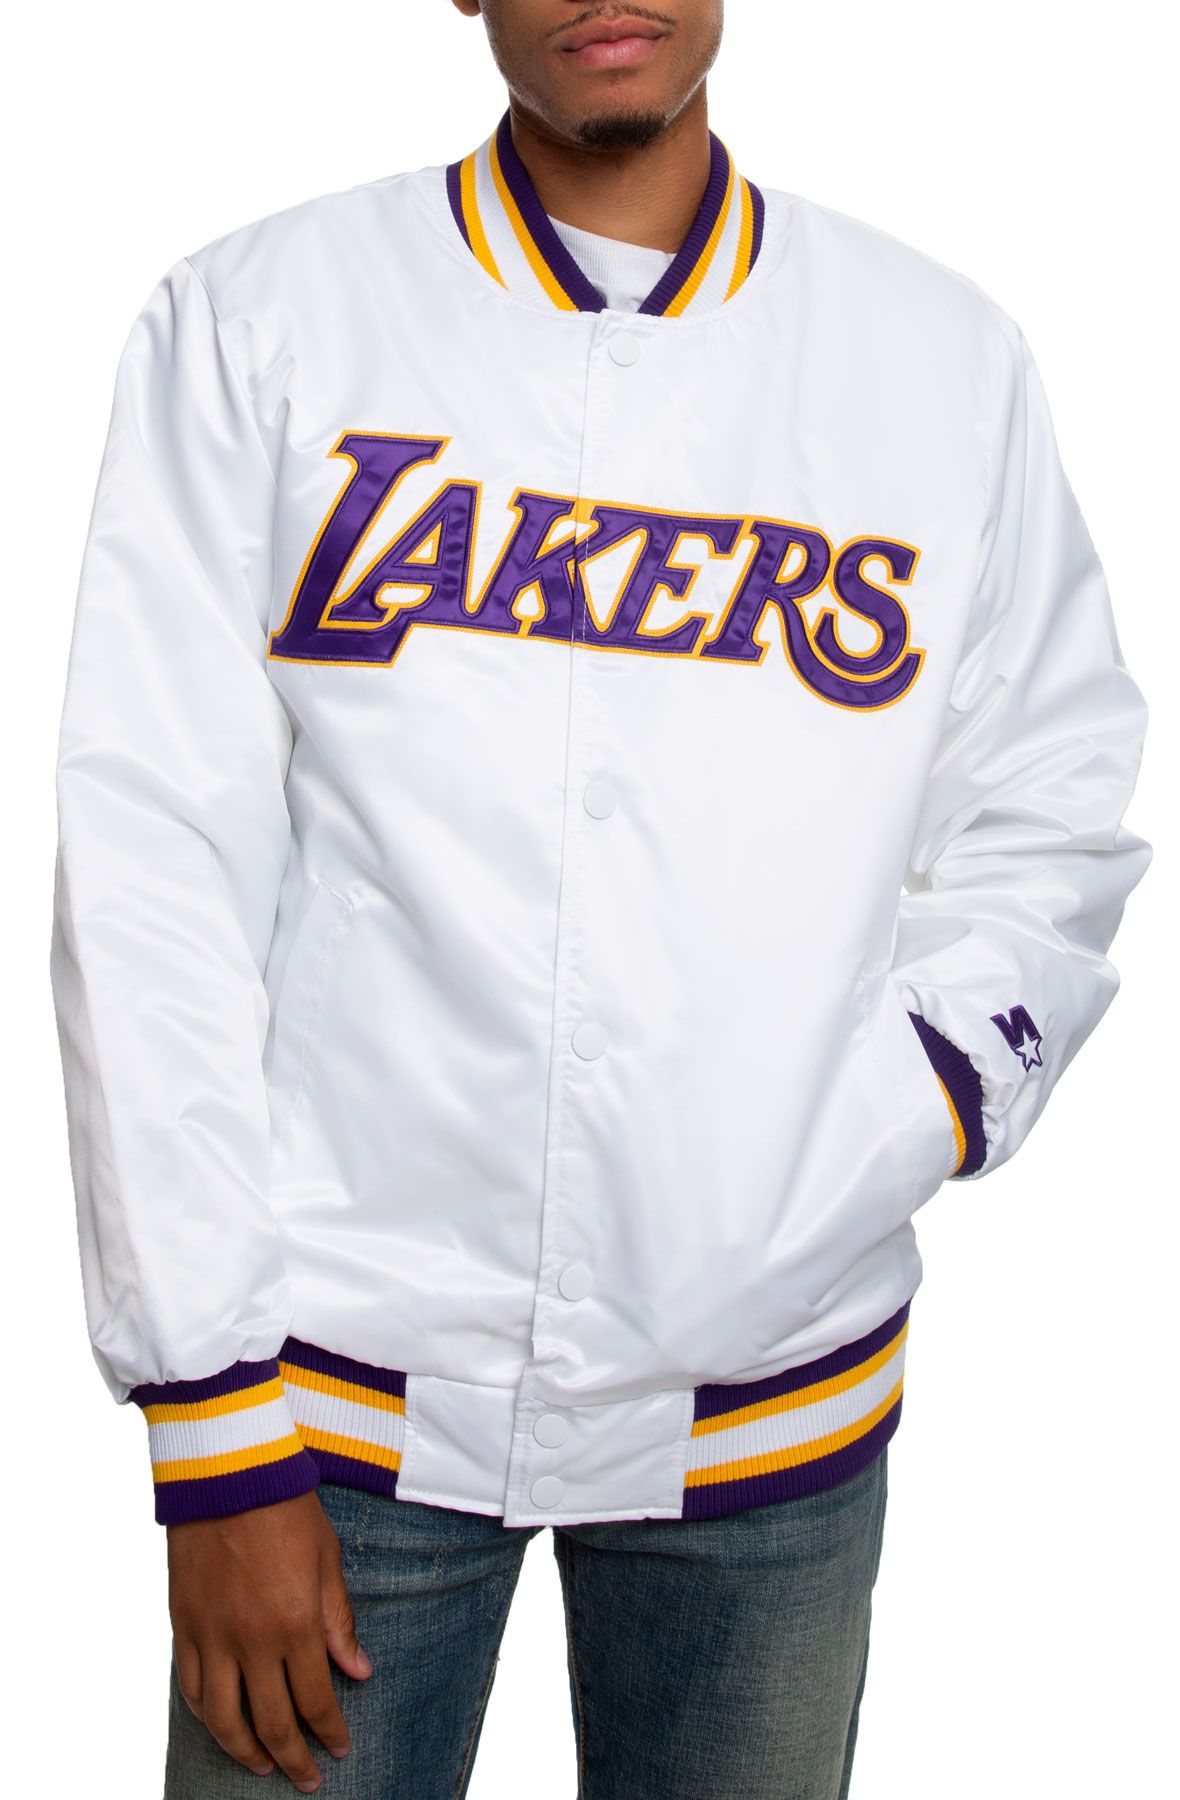 Men's Los Angeles Lakers Starter White/Purple The Pro III Quarter-Zip  Hoodie Jacket